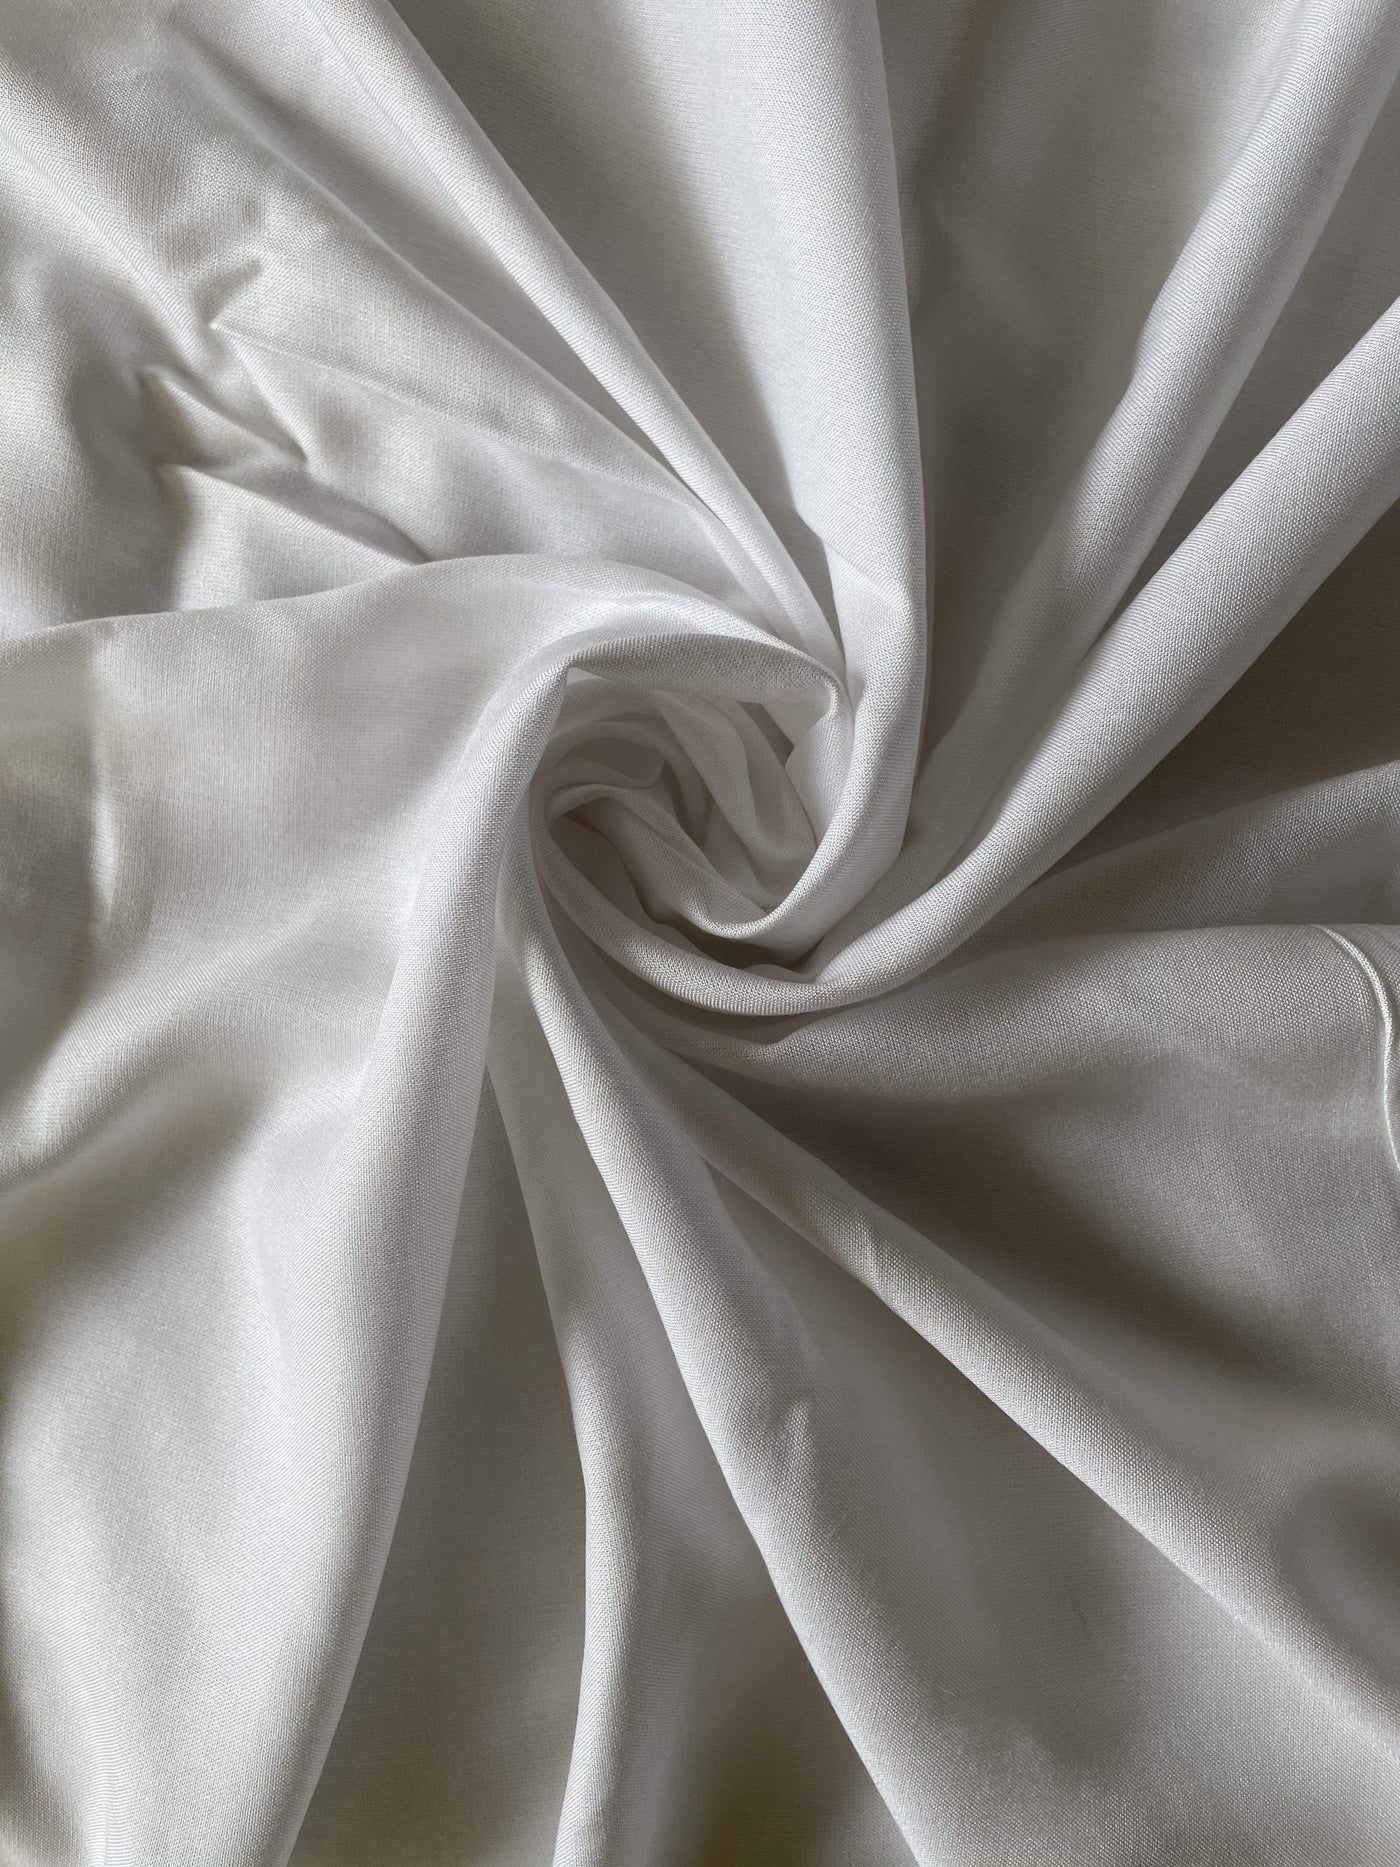 Fabric Pandit Cut Piece (CUT PIECE) White Color Pure Rayon Fabric